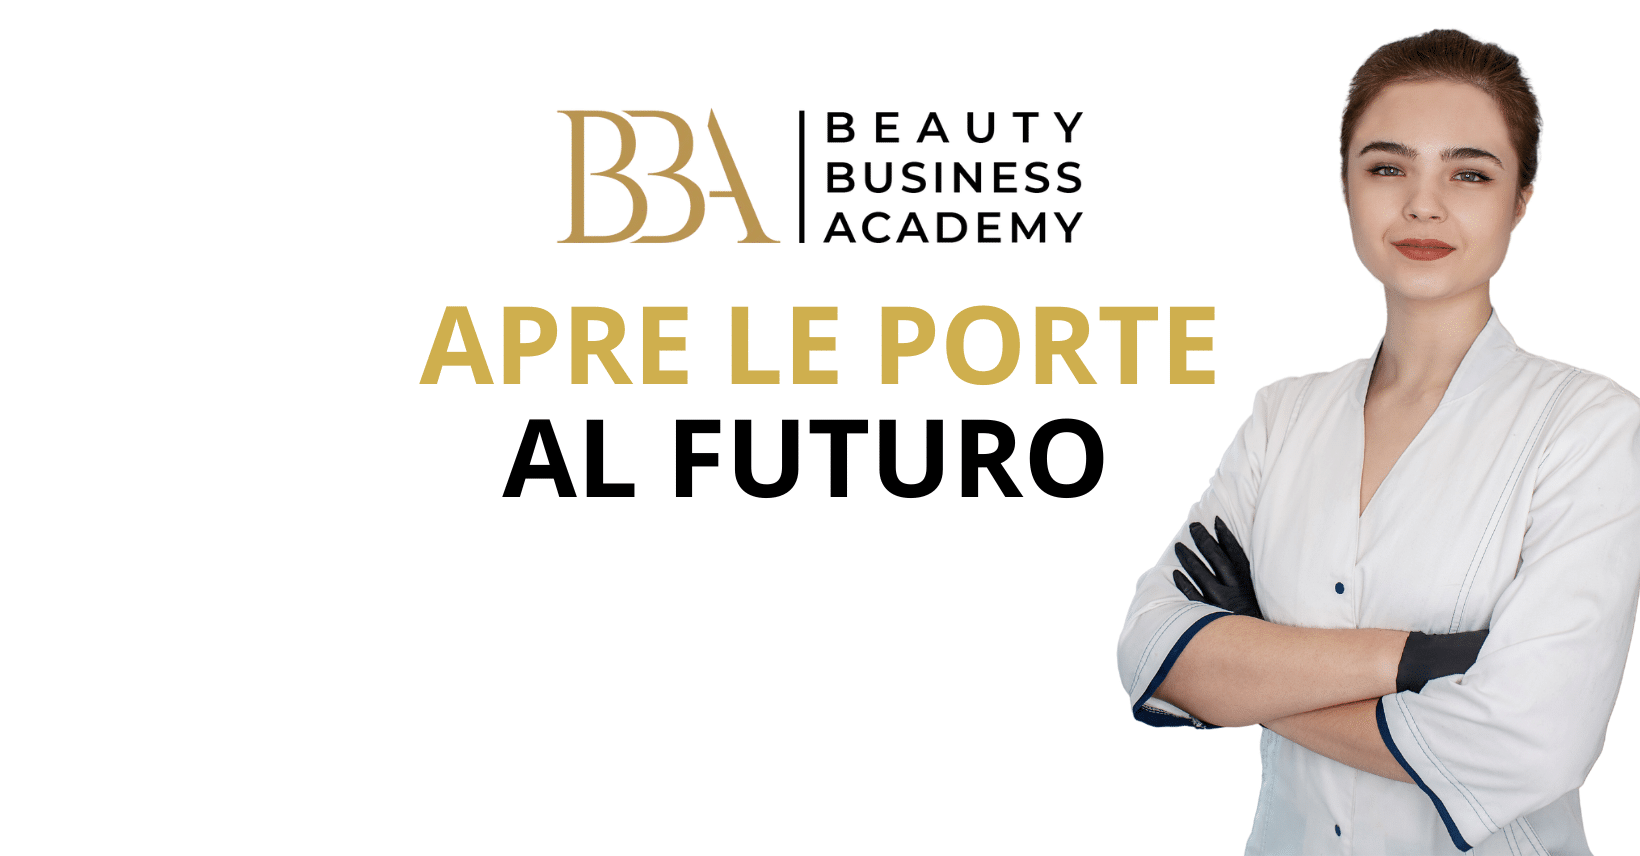 Beauty business academy